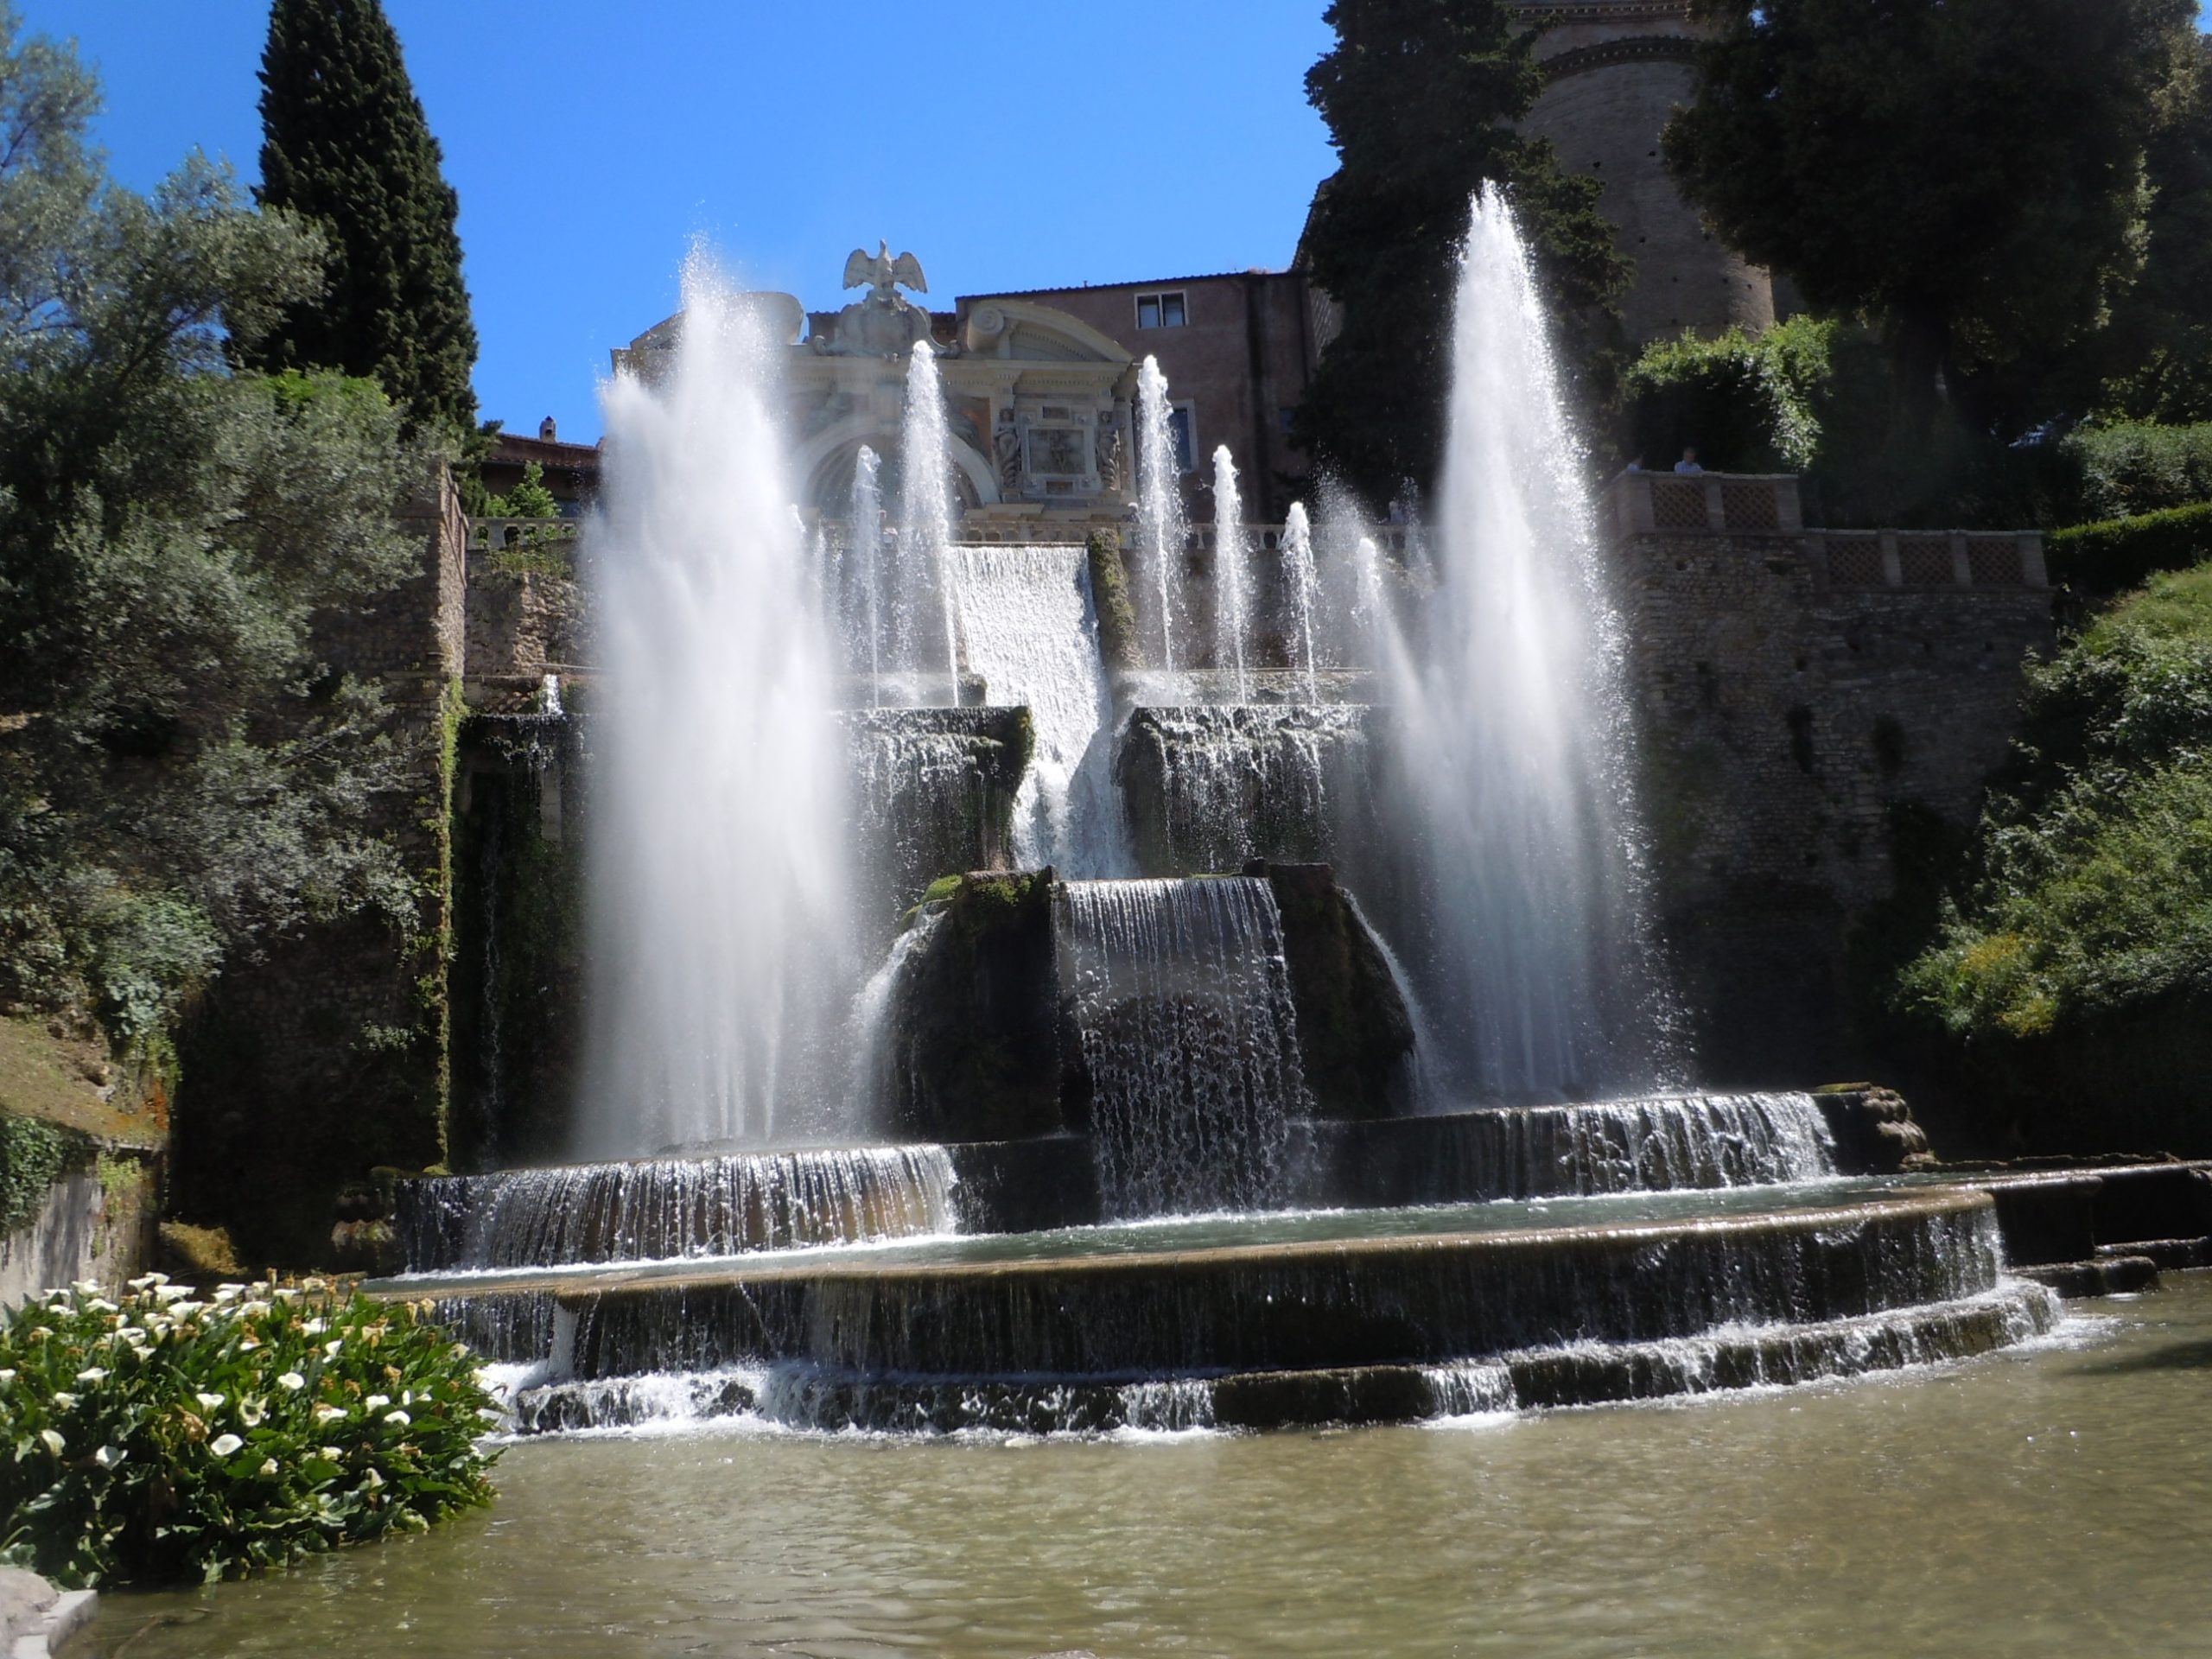 Villa d'Este, near Tivoli, was built in 1570 and has spectacular fountains